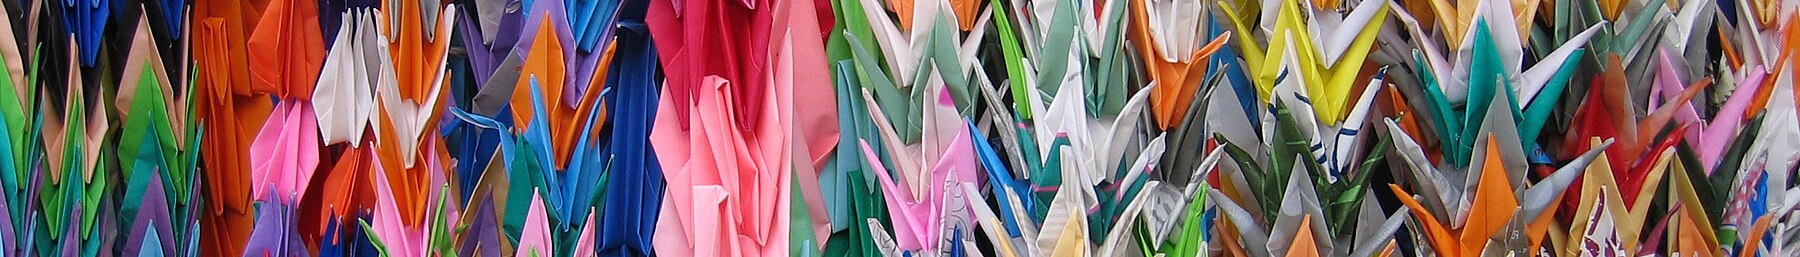 Hirošima banner Origami cranes.jpg